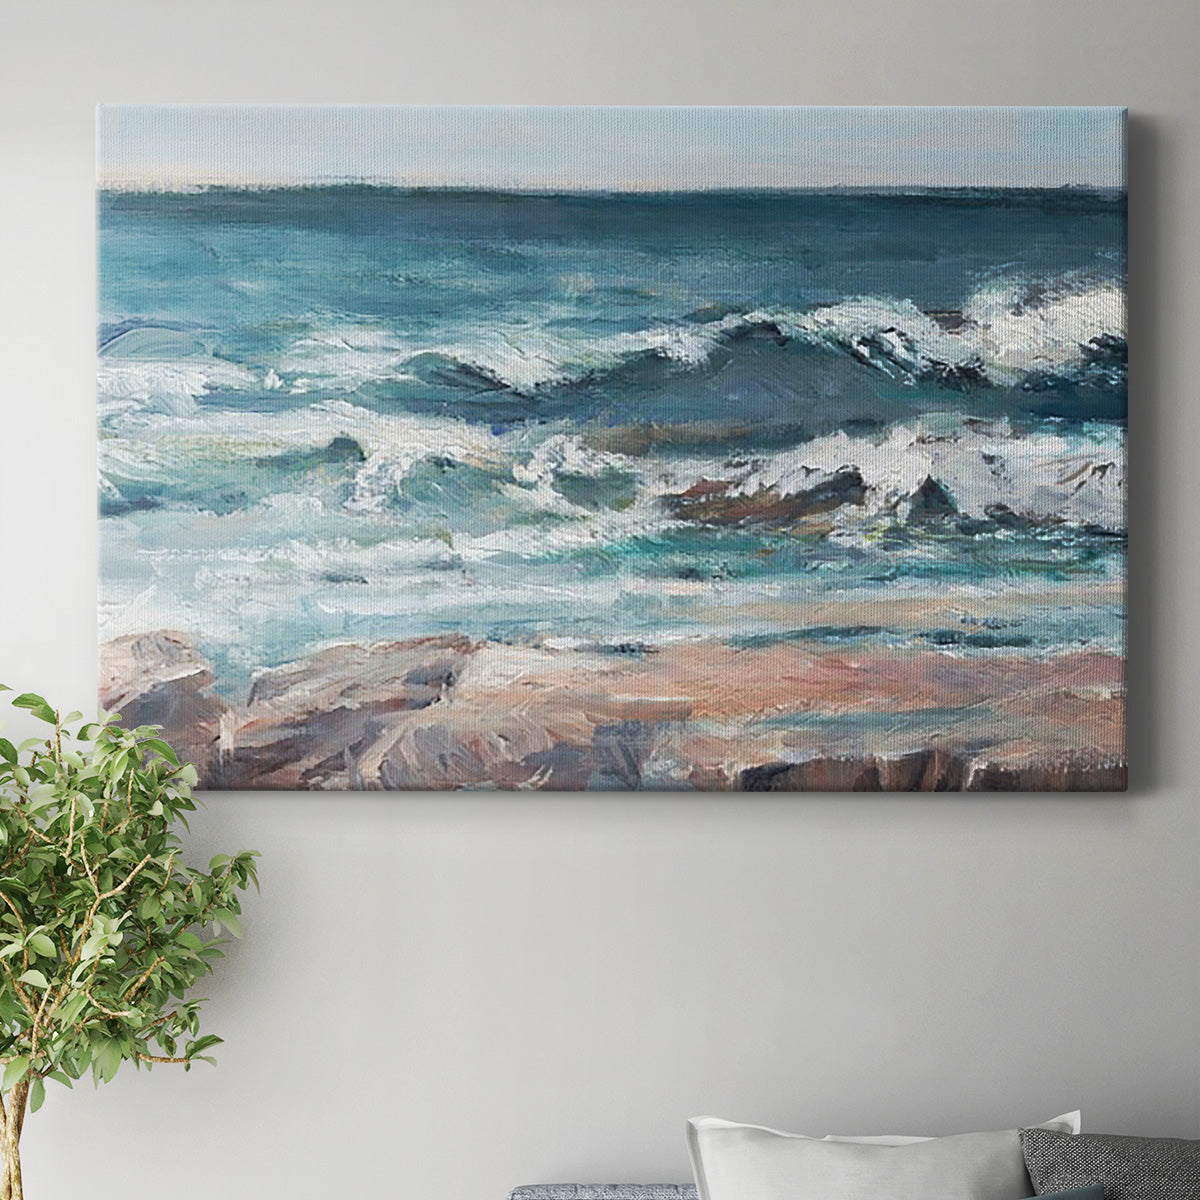 Ocean Breakers II Premium Gallery Wrapped Canvas - Ready to Hang